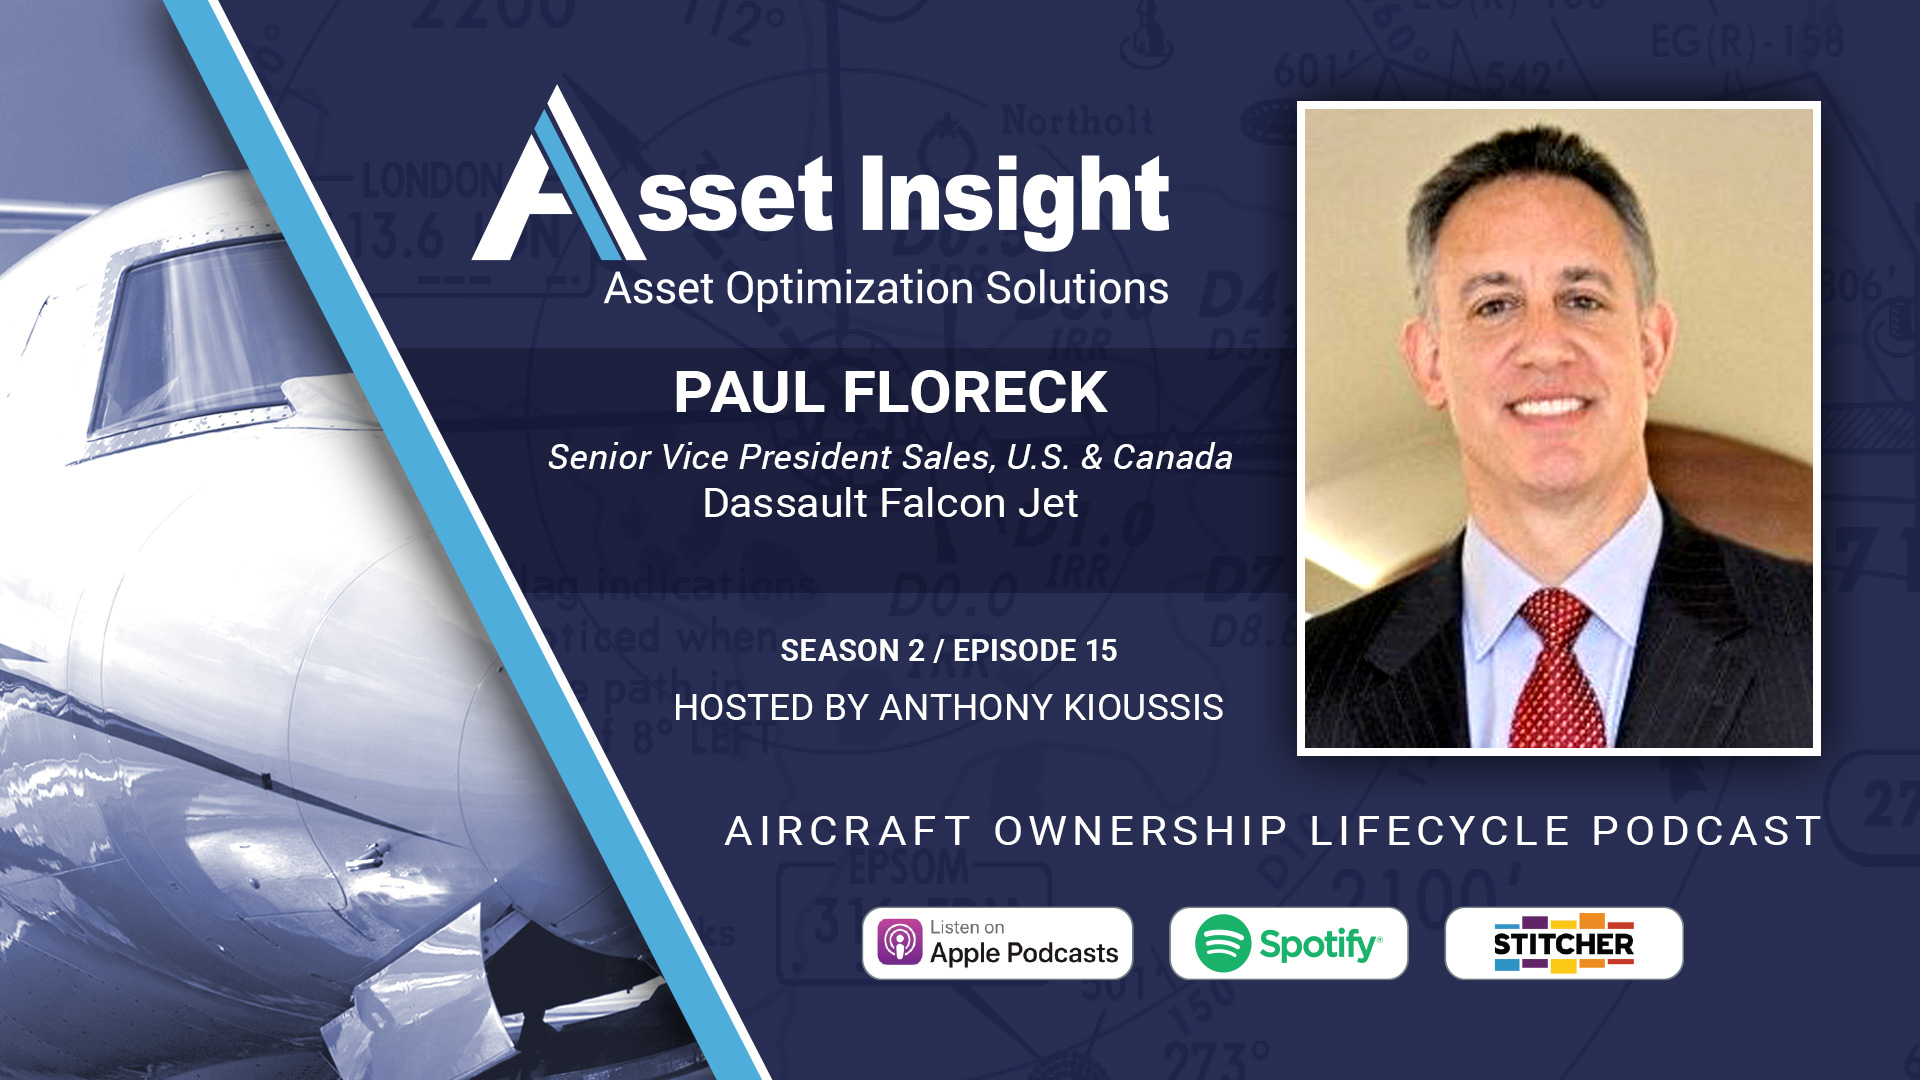 Paul Floreck, Senior Vice President Sales, U.S. & Canada, Dassault Falcon Jet